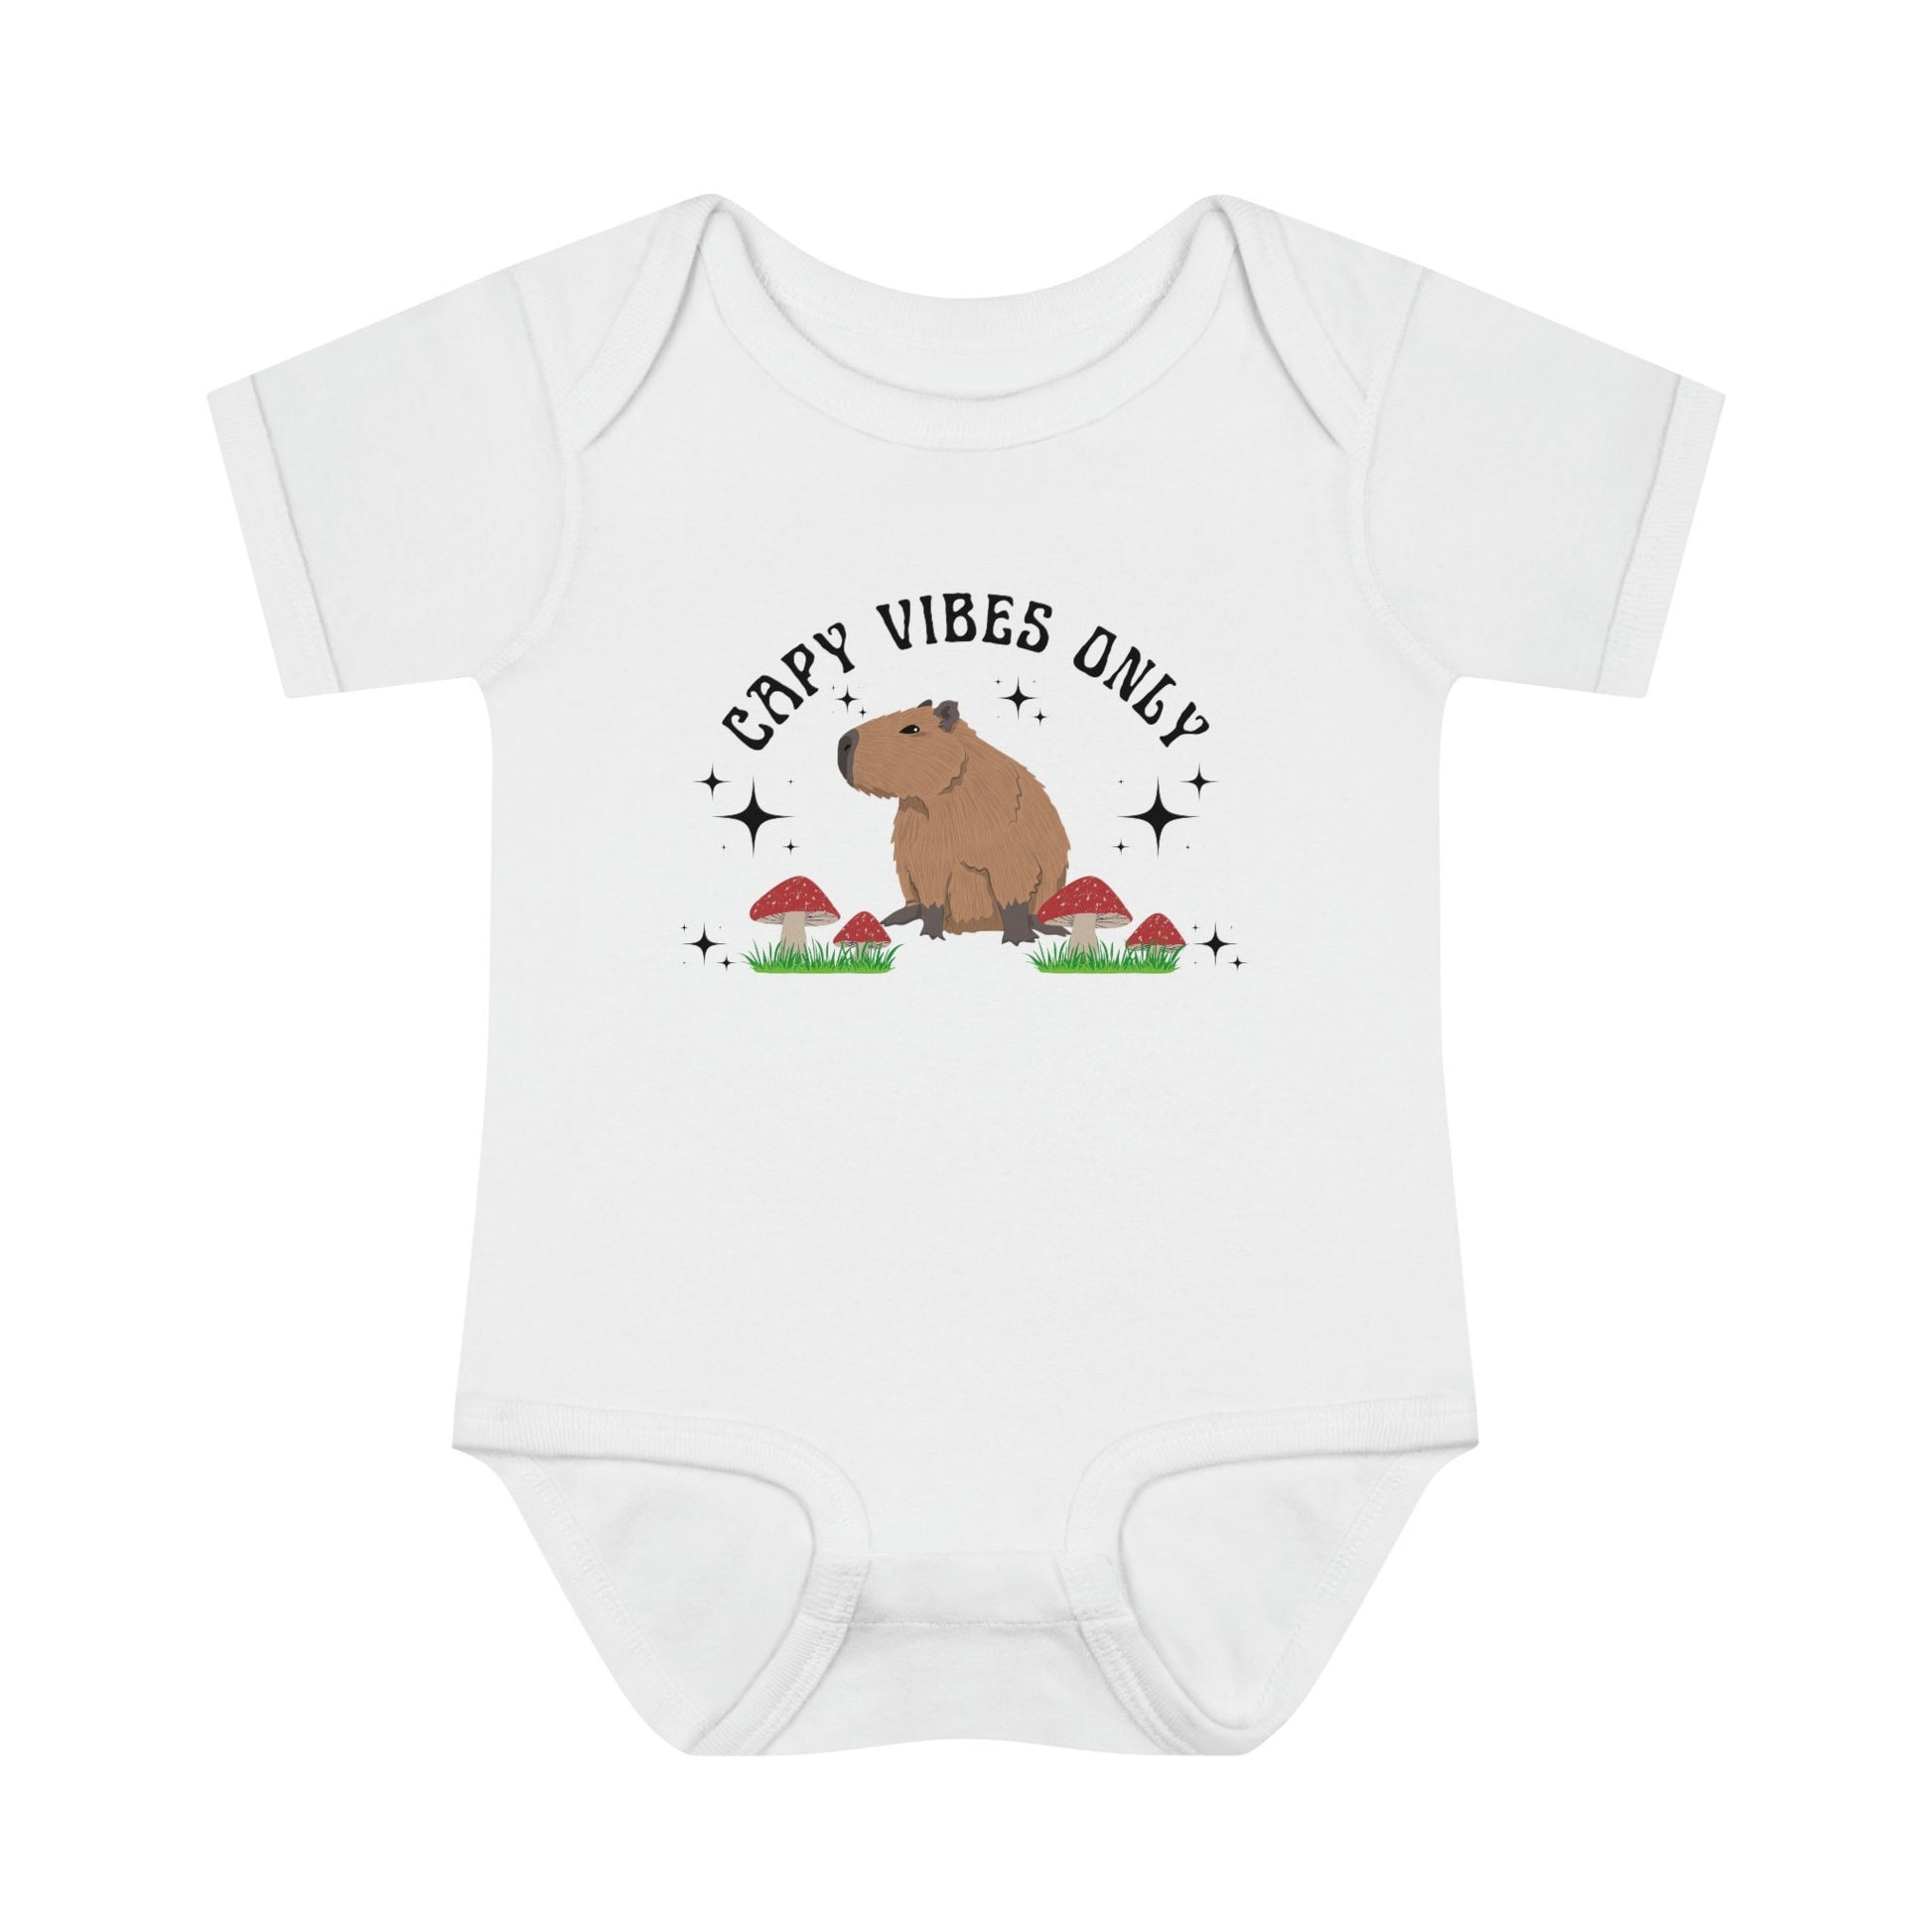 Capybara Shirt For Baby, Mushroom Baby Bodysuit, Cottagecore Baby Clothes Retro Mushroom Infant Bodysuit Capy Vibes Only Capybara Baby Gift